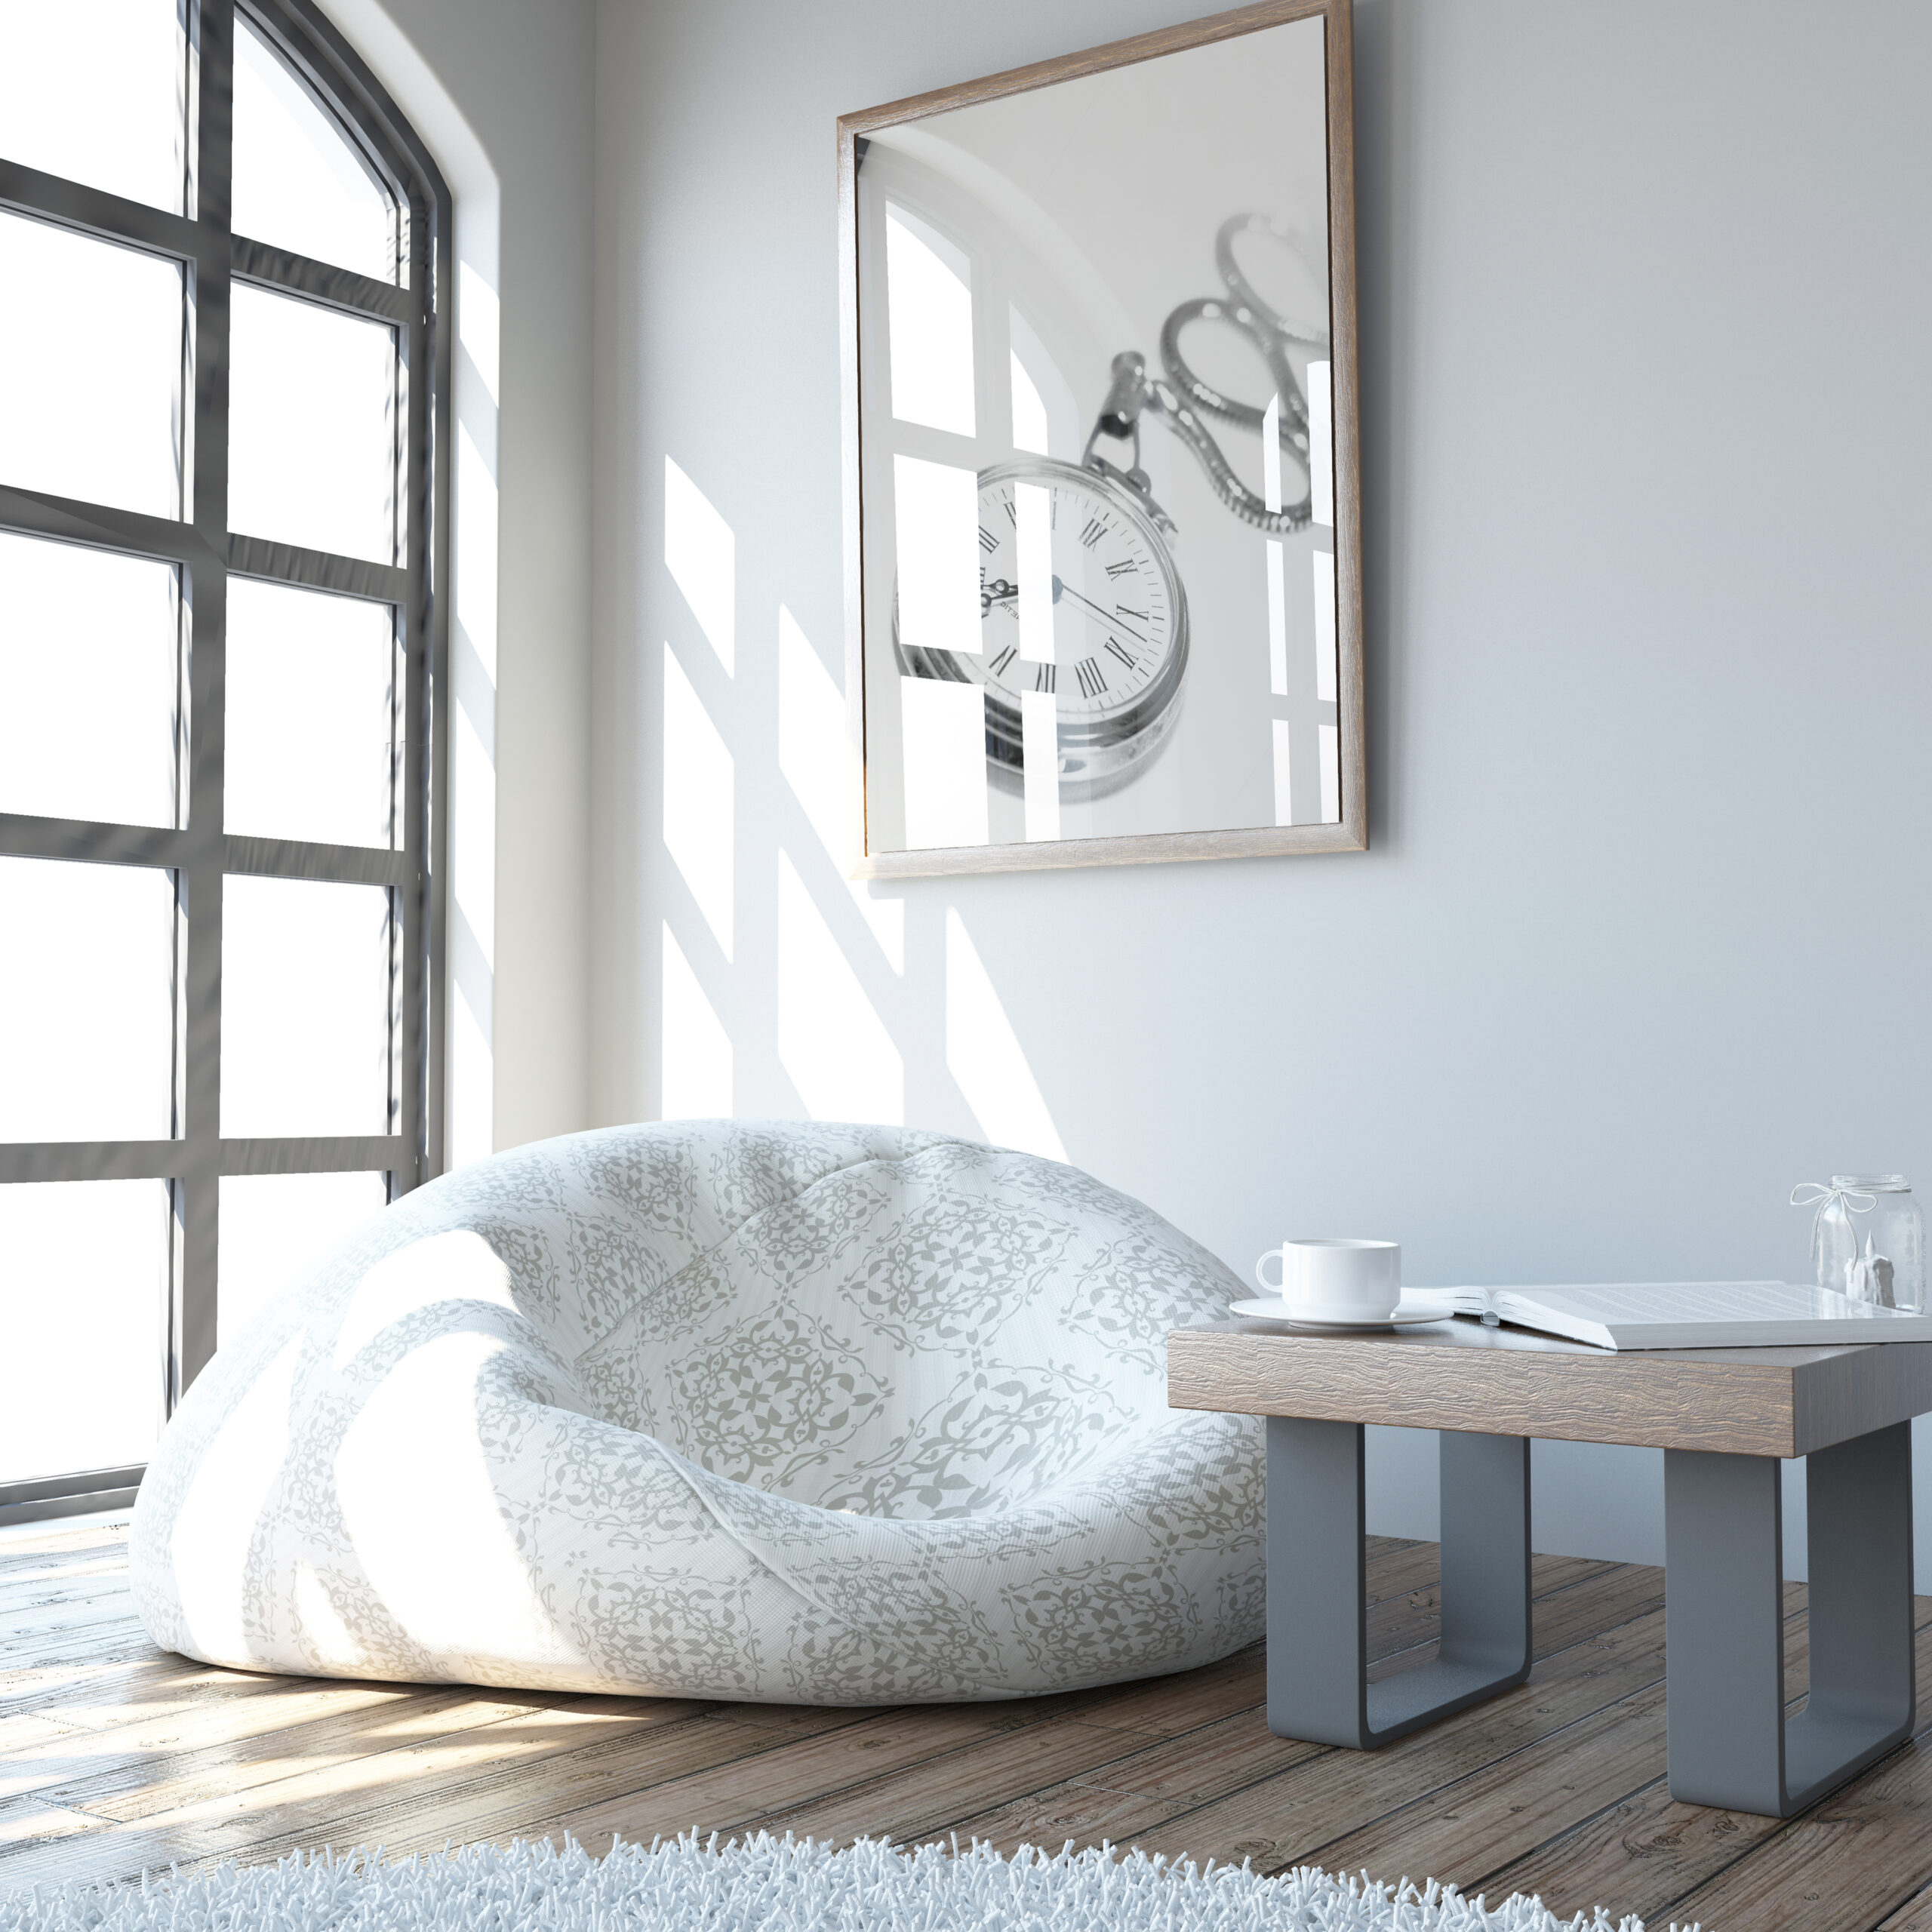 3D render of a Living Room Interior